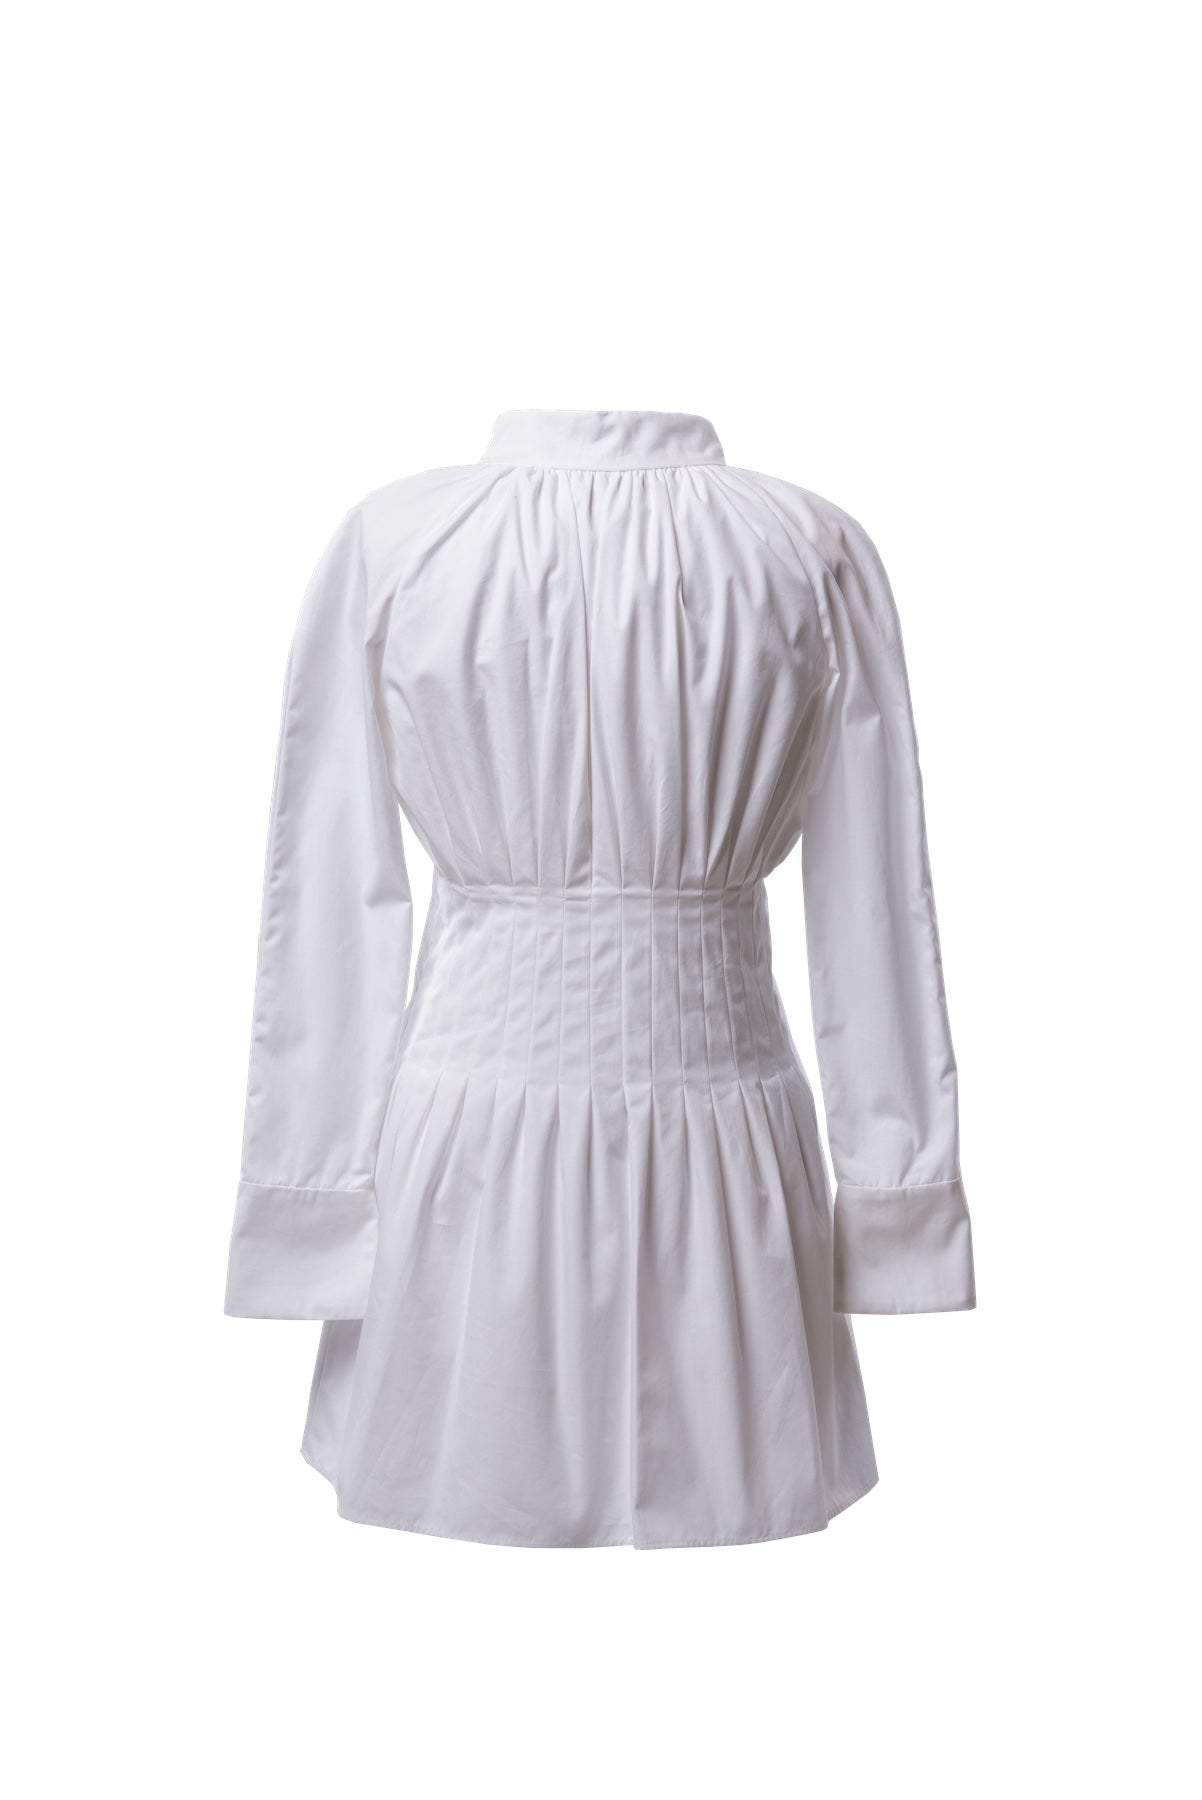 Short white Almaty dress